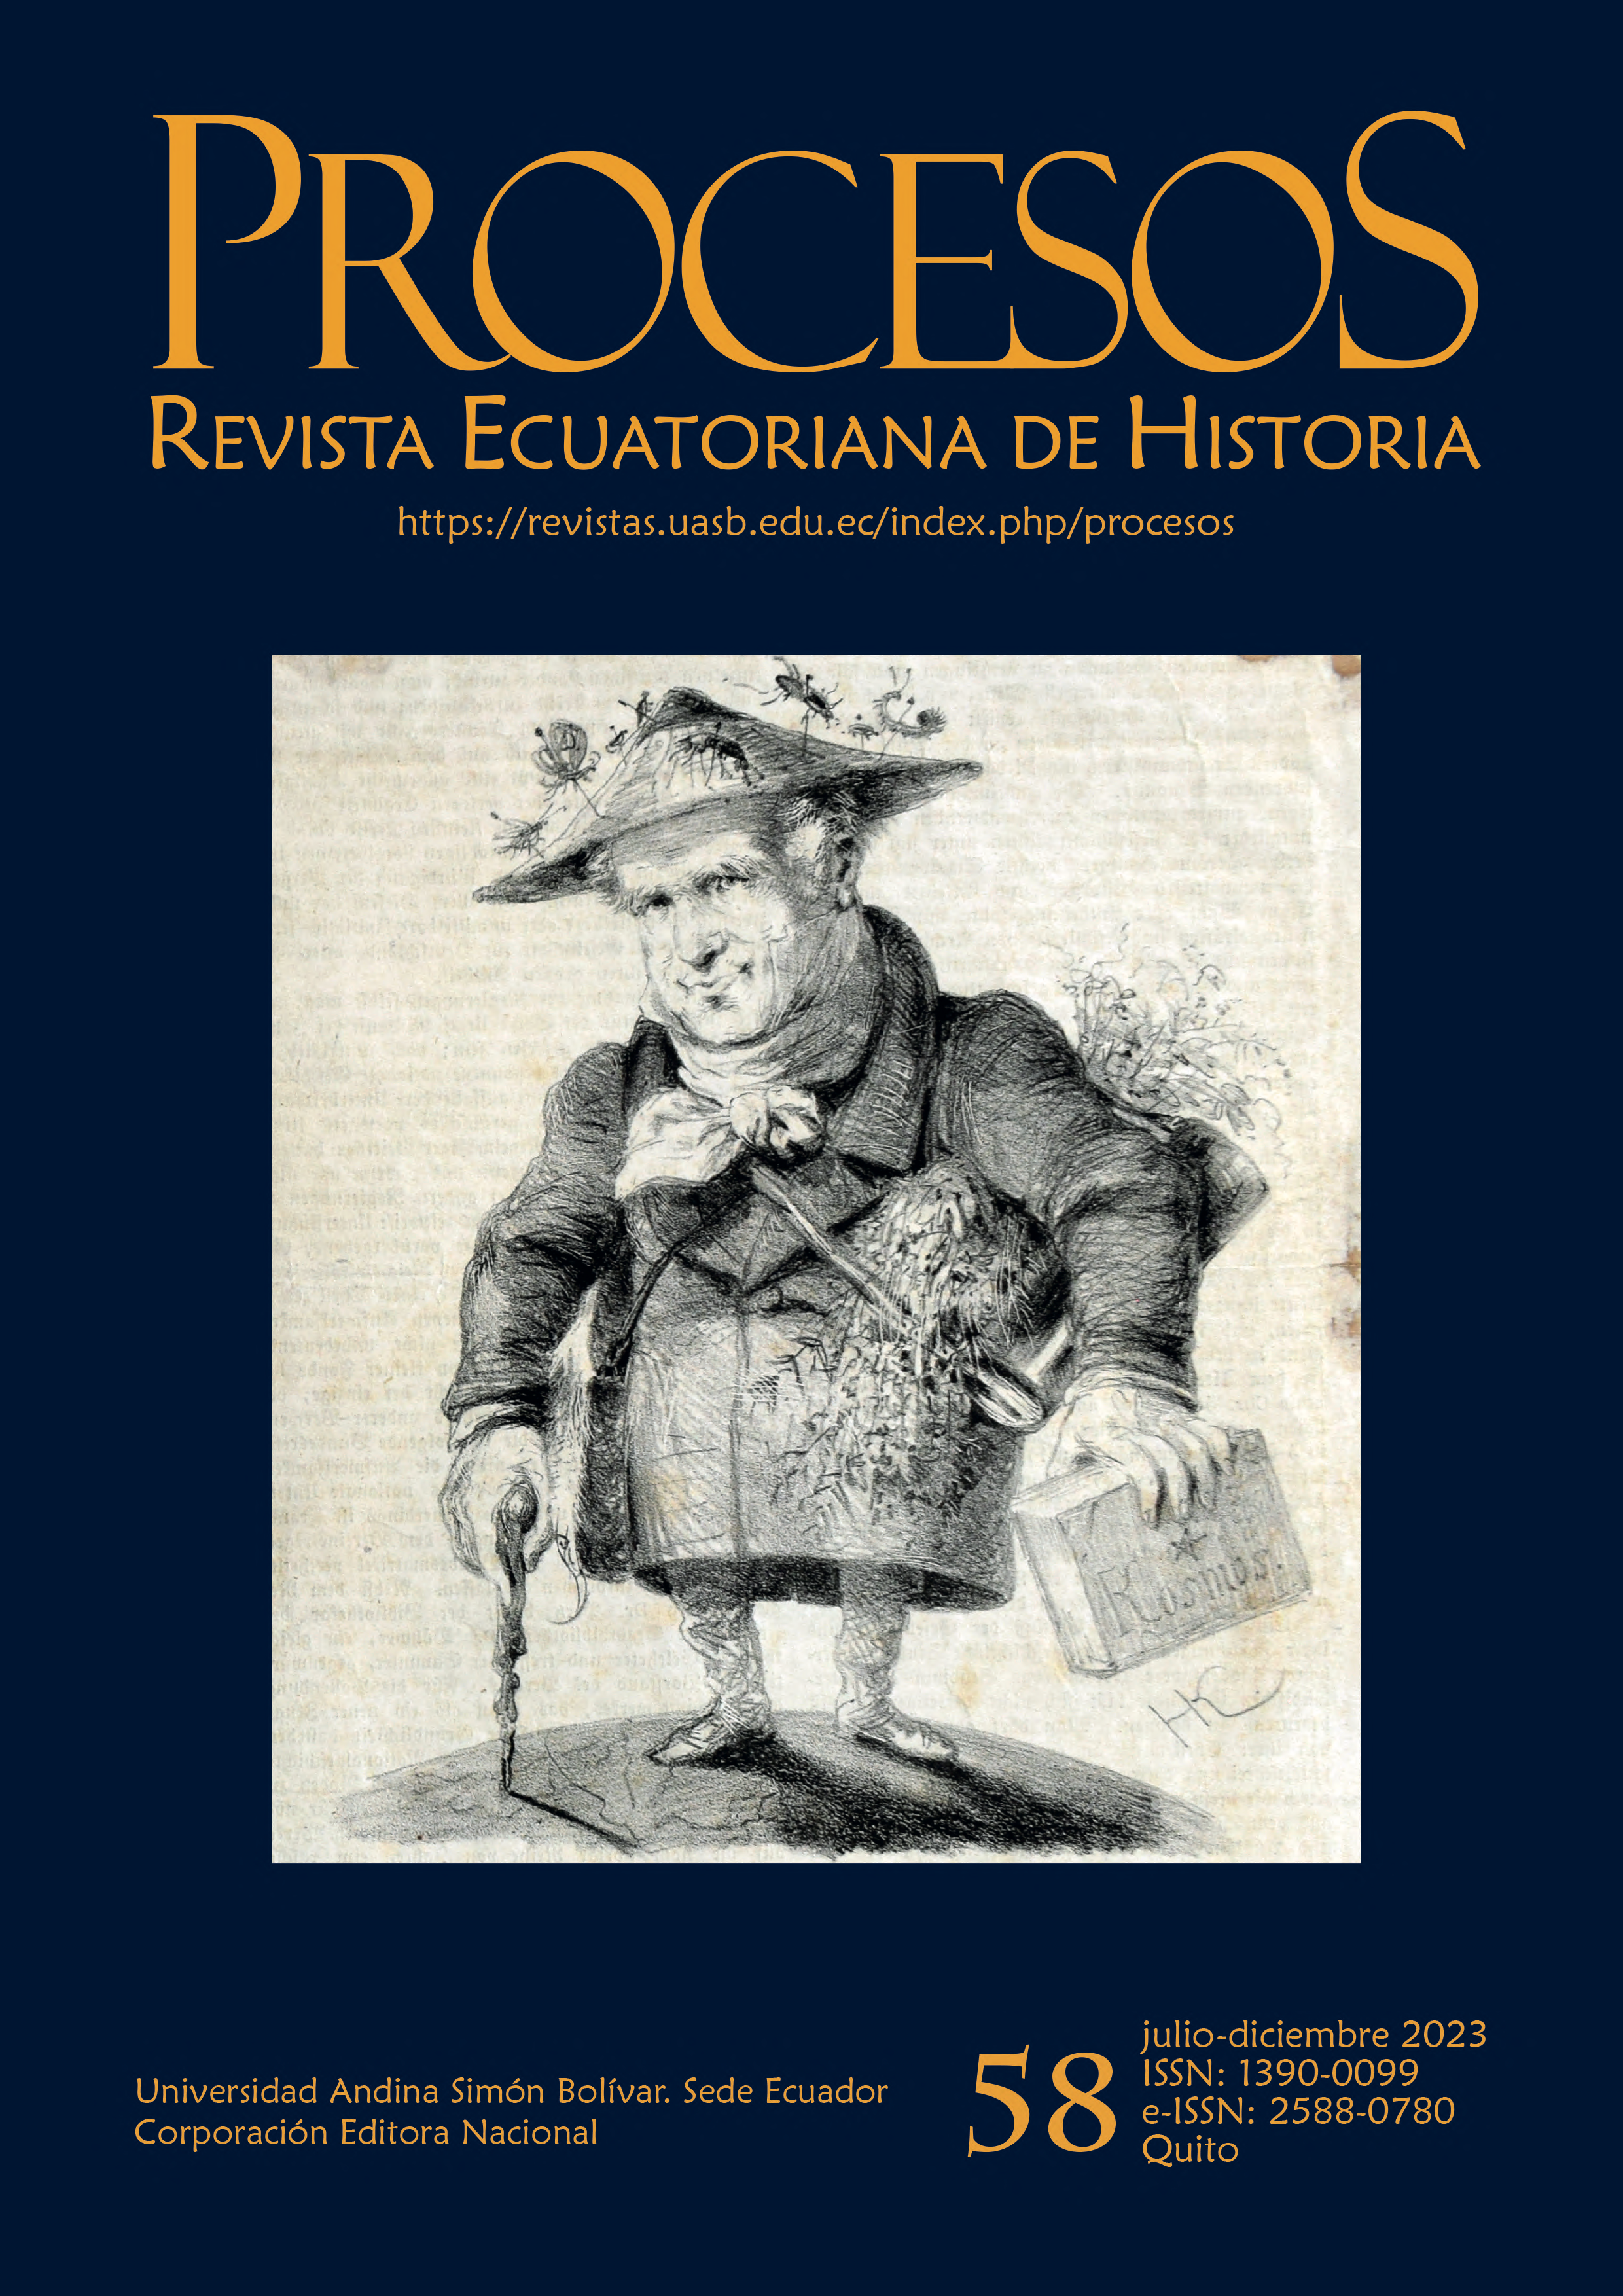 Procesos: Revista Ecuatoriana de Historia